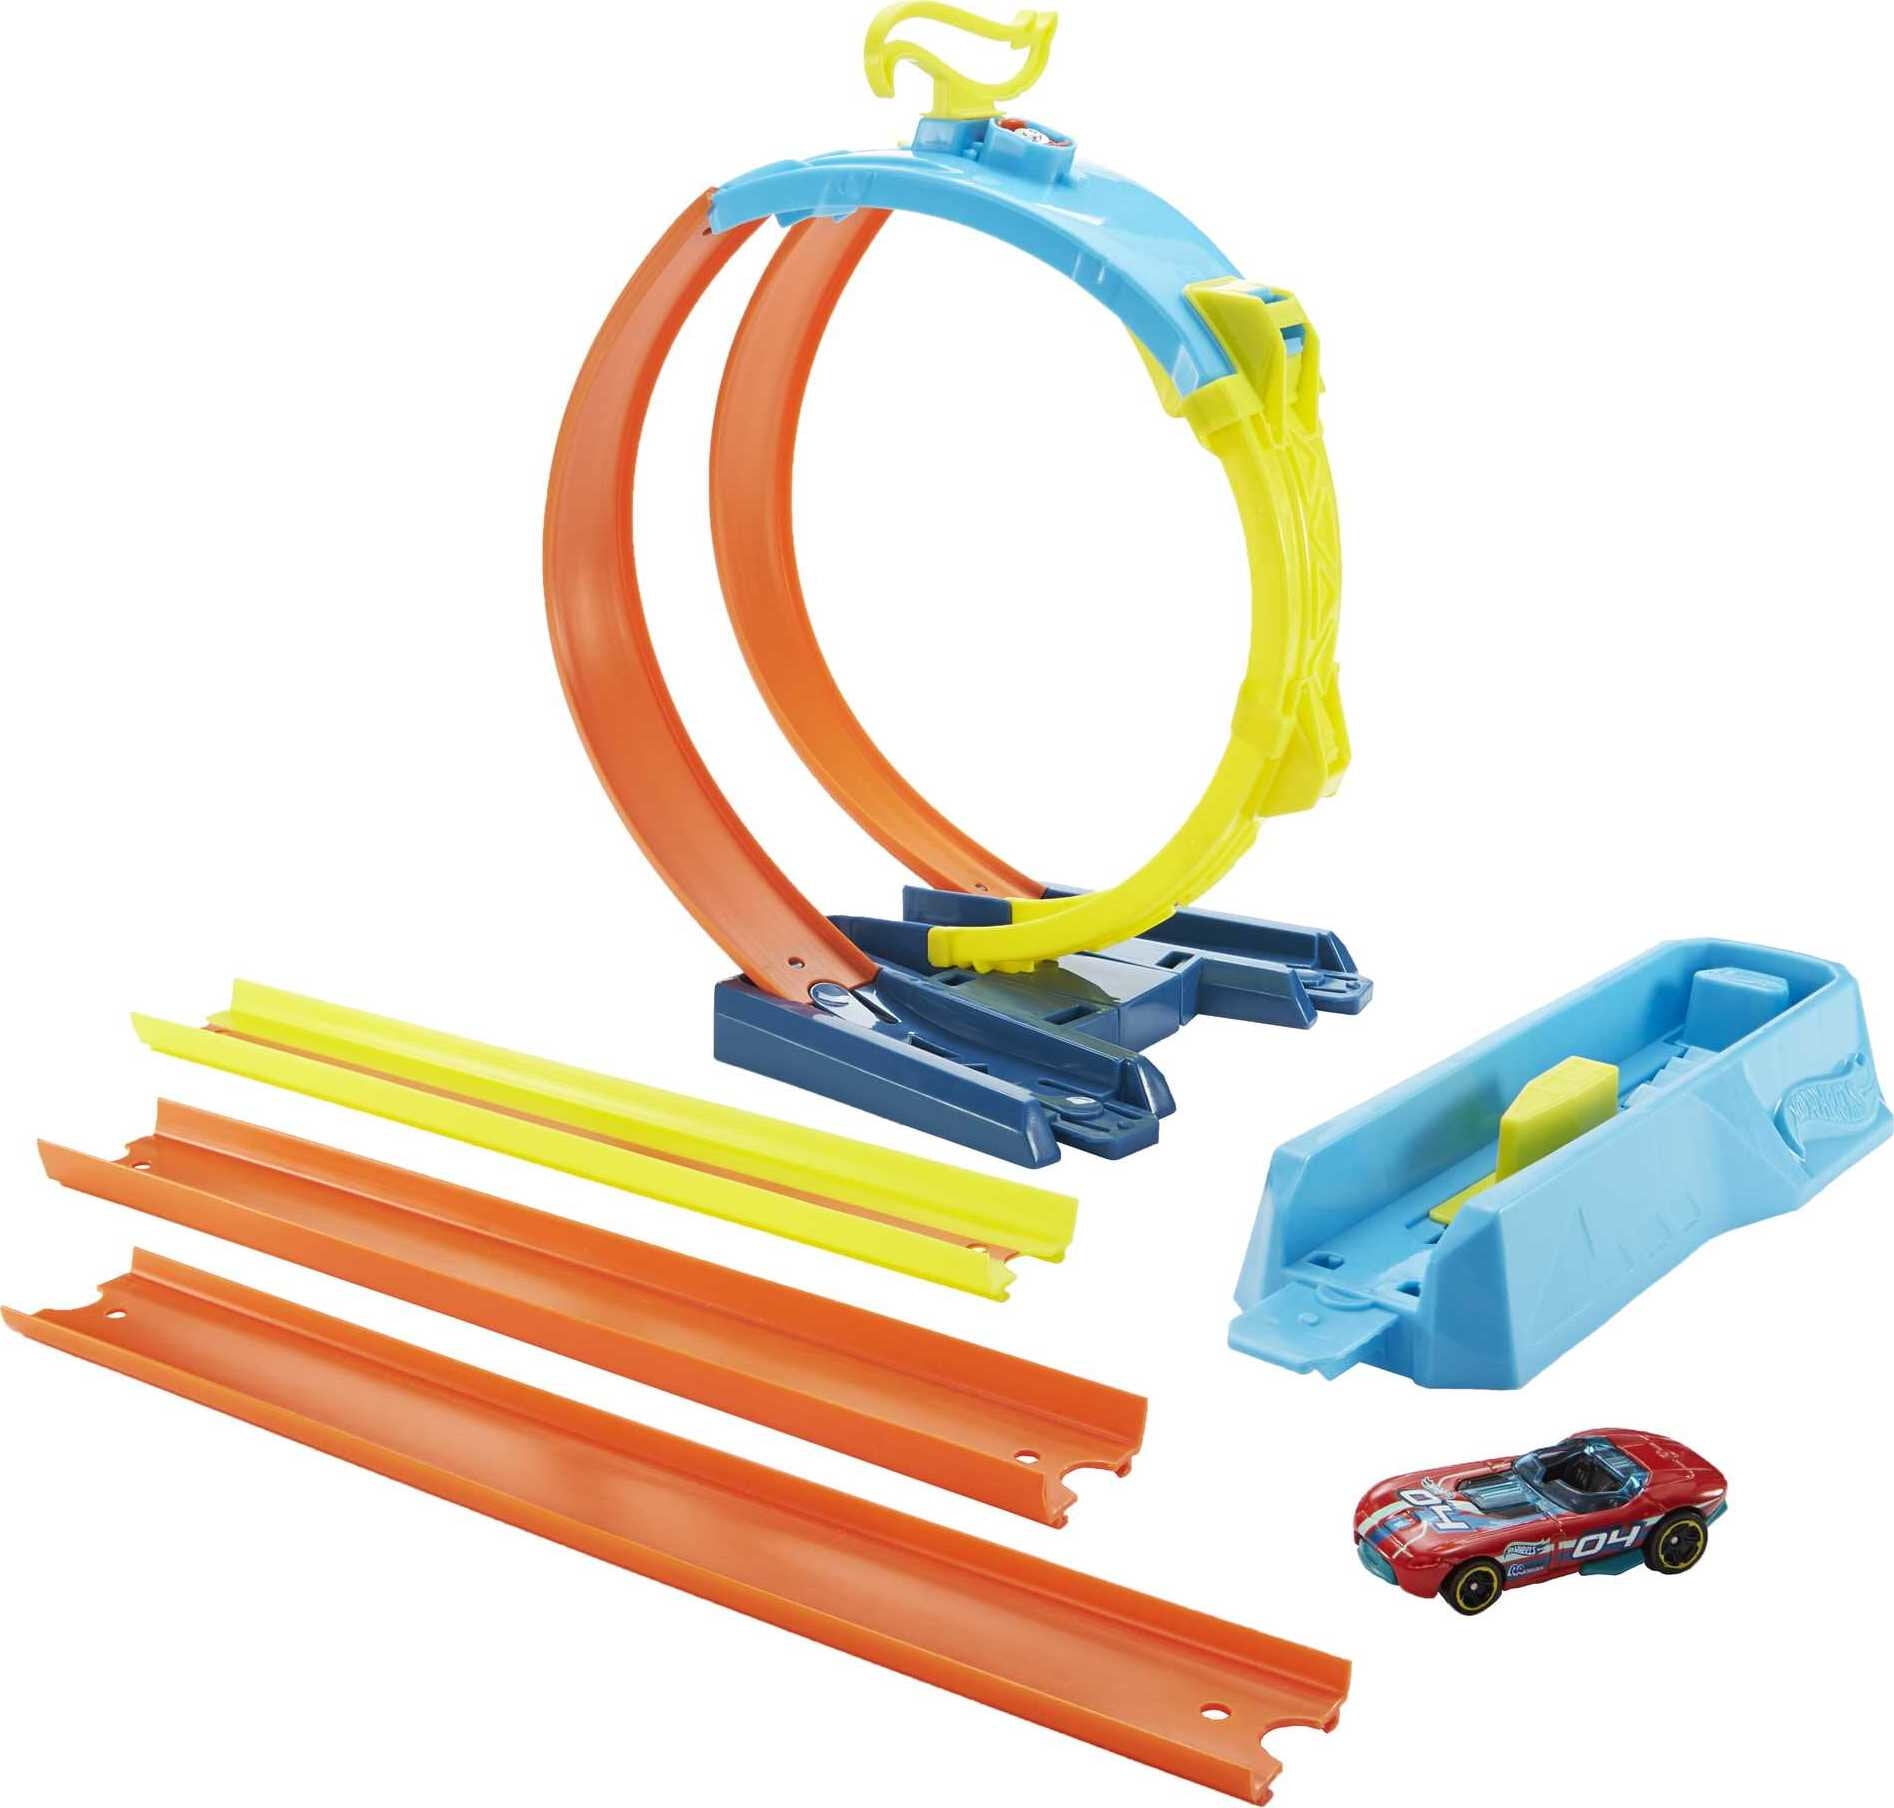 Hot Wheels Track Builder Pista Propulsor de Looping - Mattel em